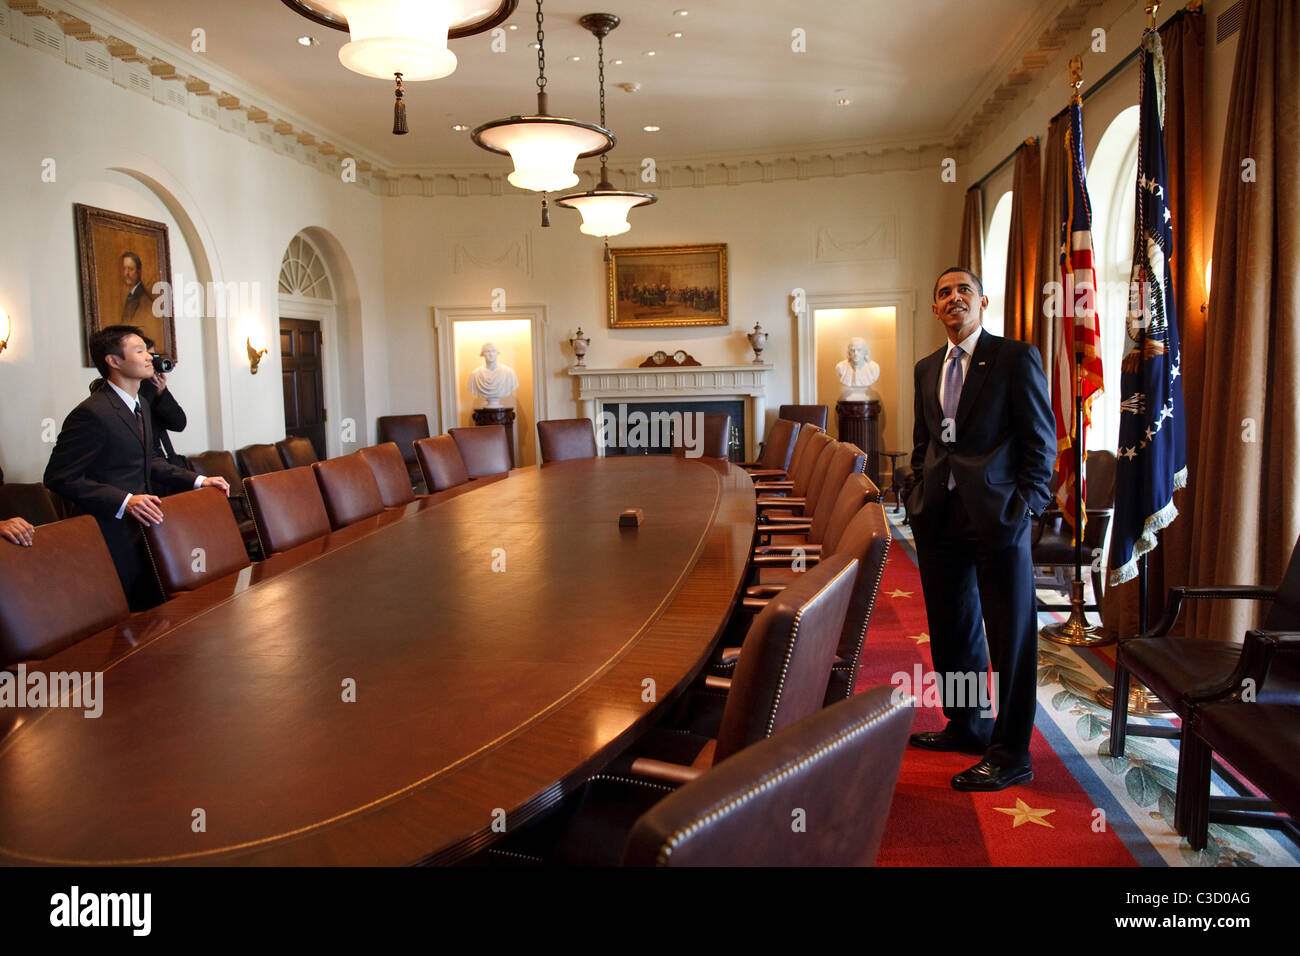 Us President Barack Obama Surveys The Cabinet Room With Family